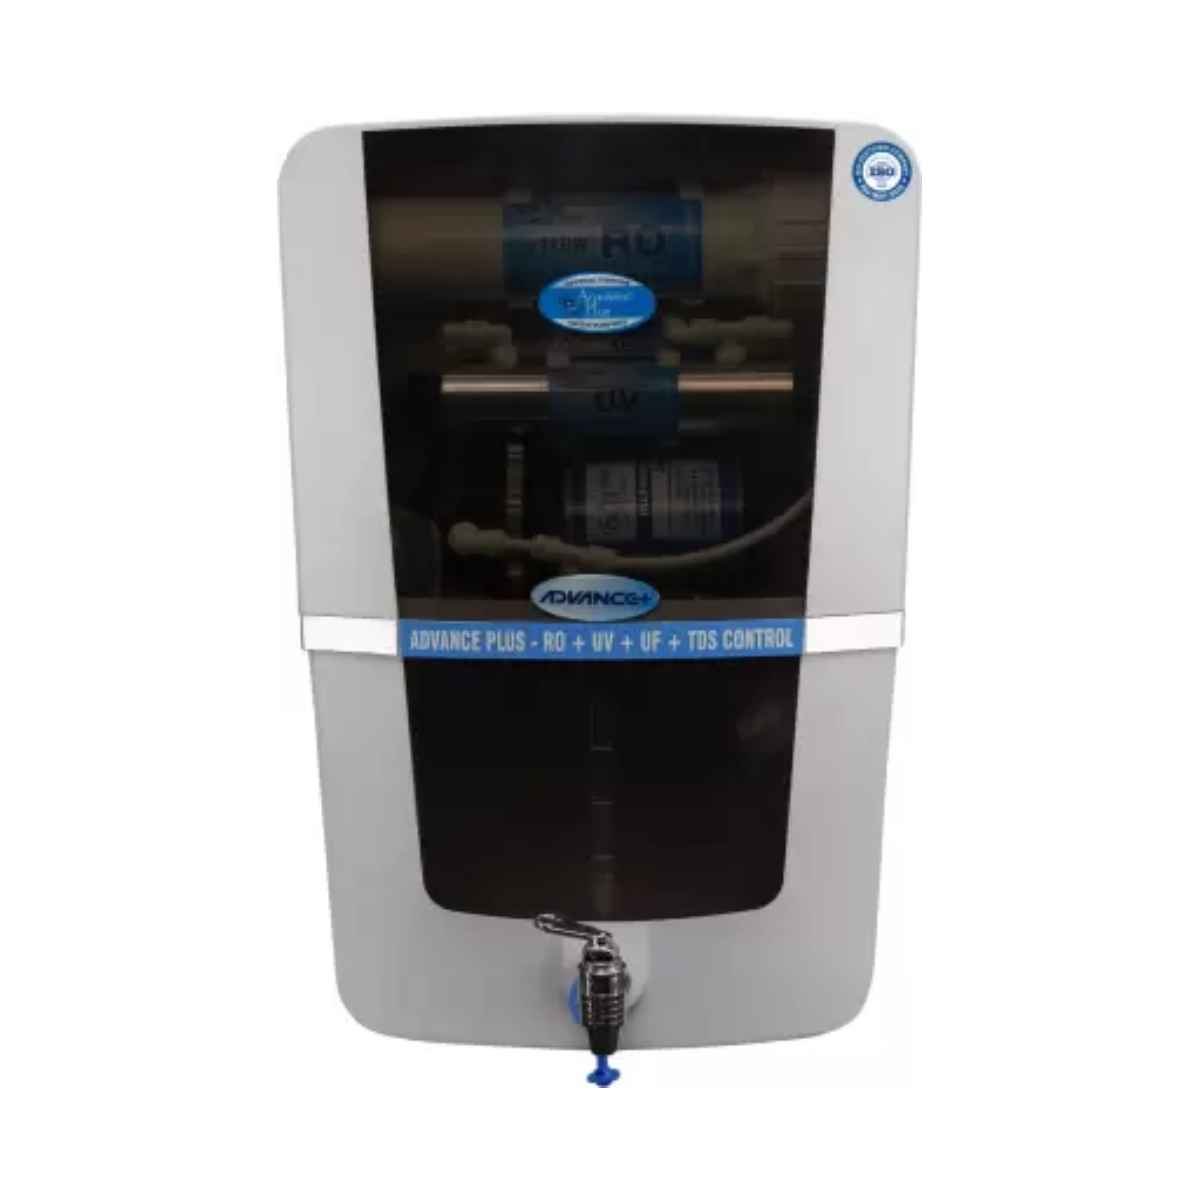 Aquatec Plus Advance plus 12 L RO + UV + UF + TDS Water Purifier